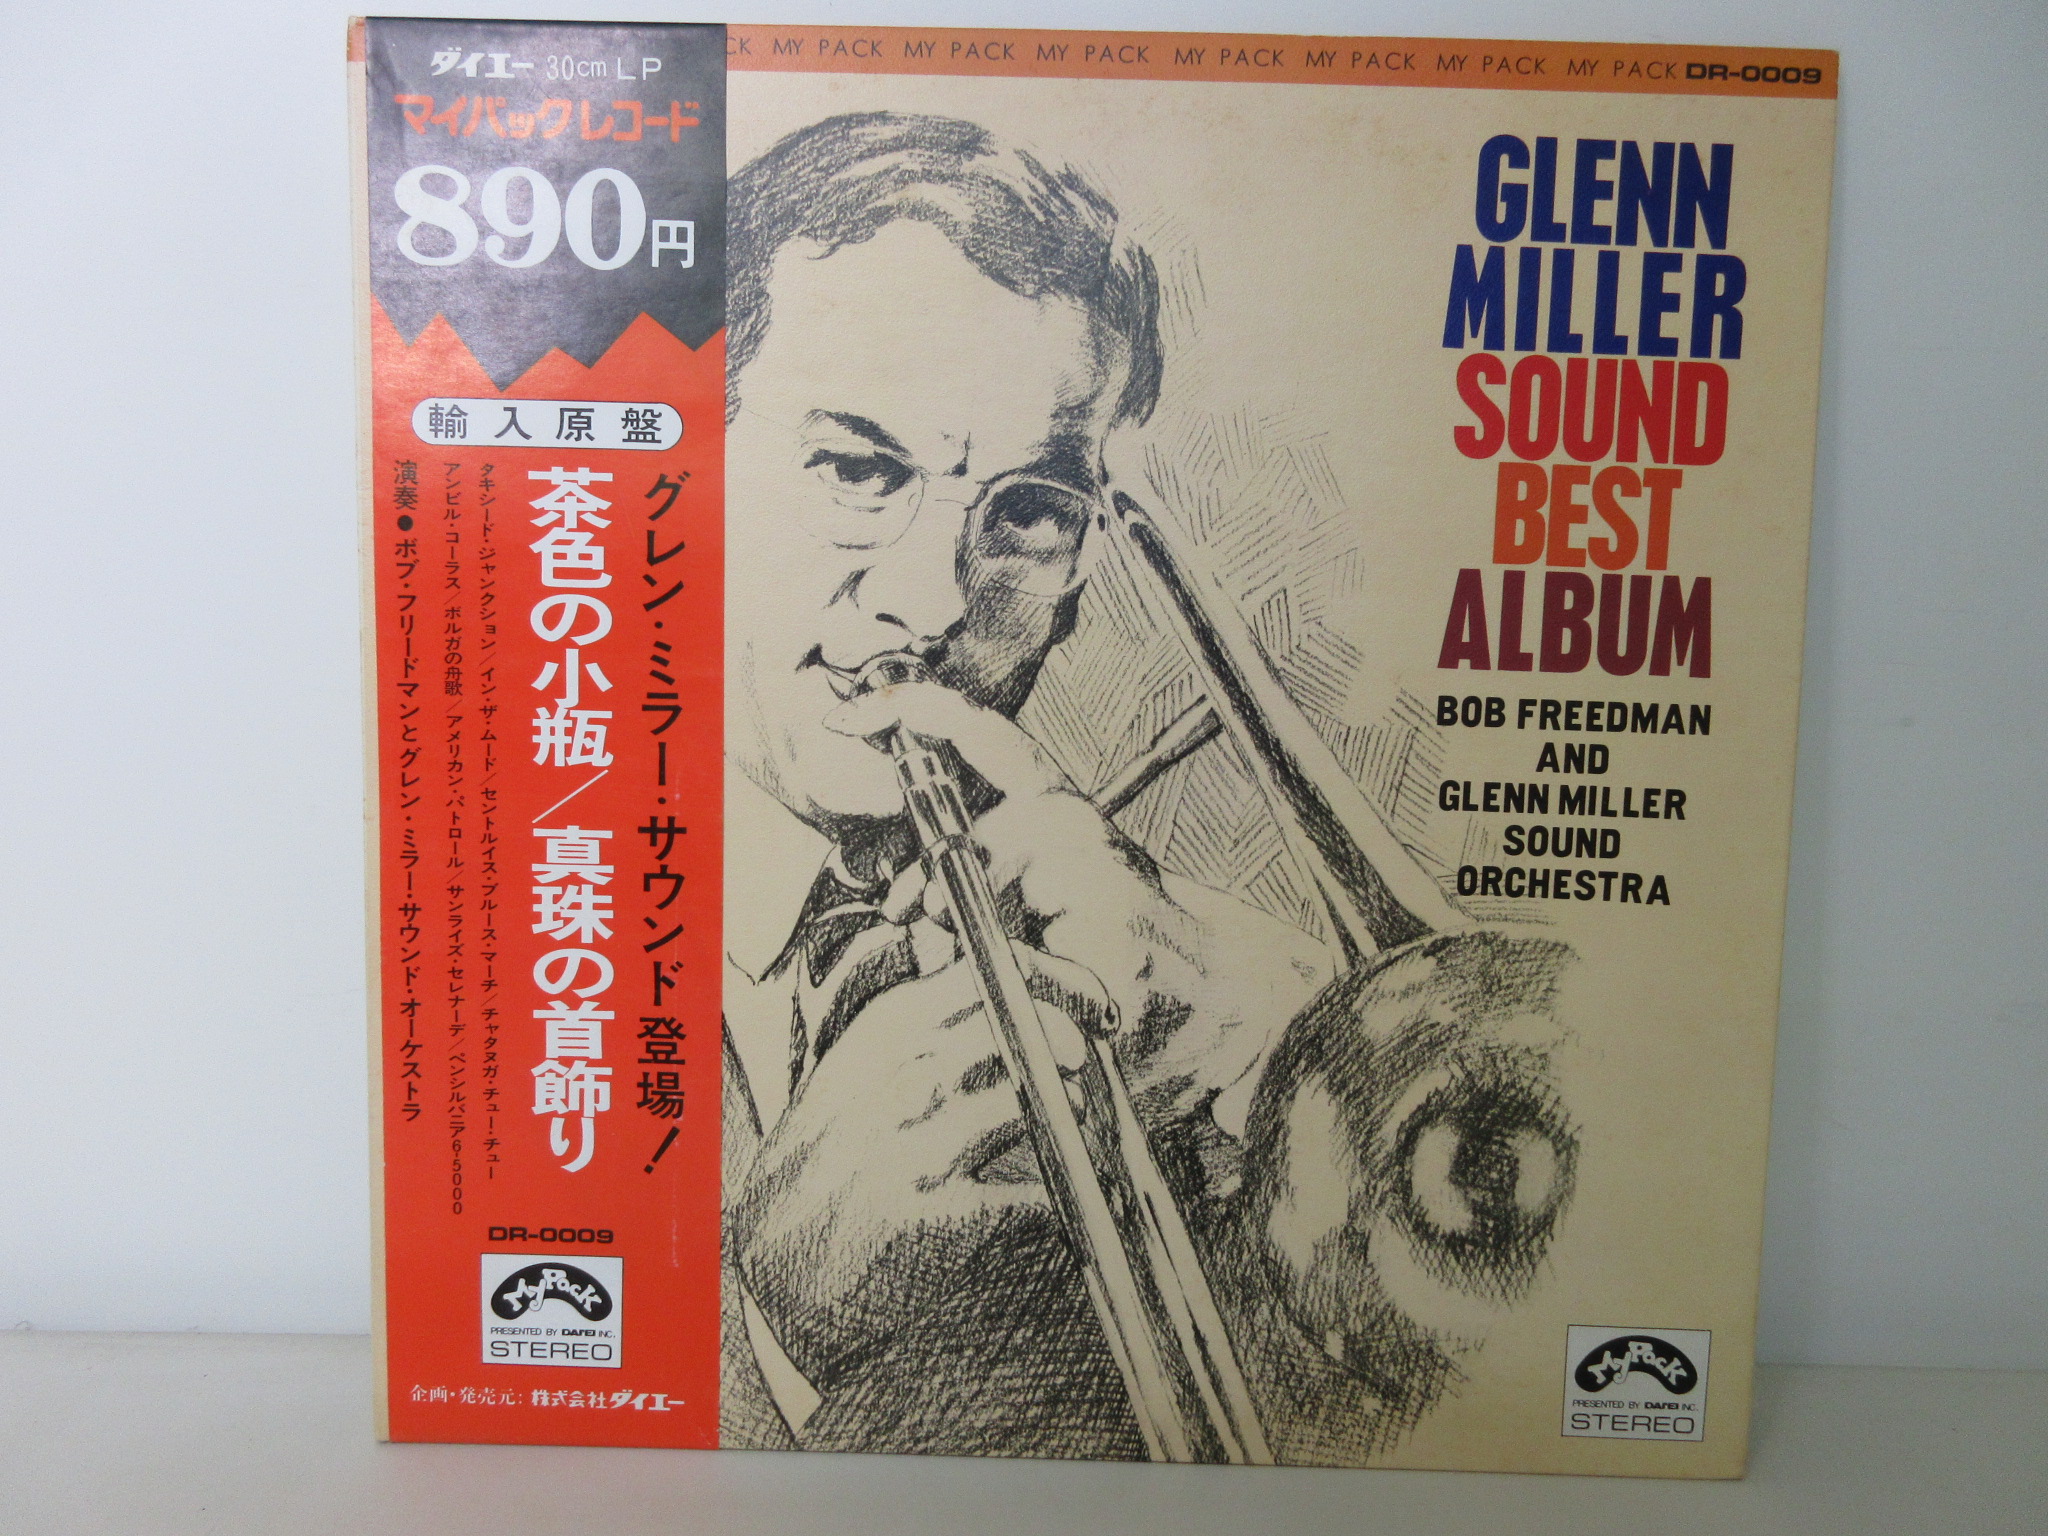 Bob Freedman And Glenn Miller Sound Orchestra - Glenn Miller Sound Best Album [DR-0009]